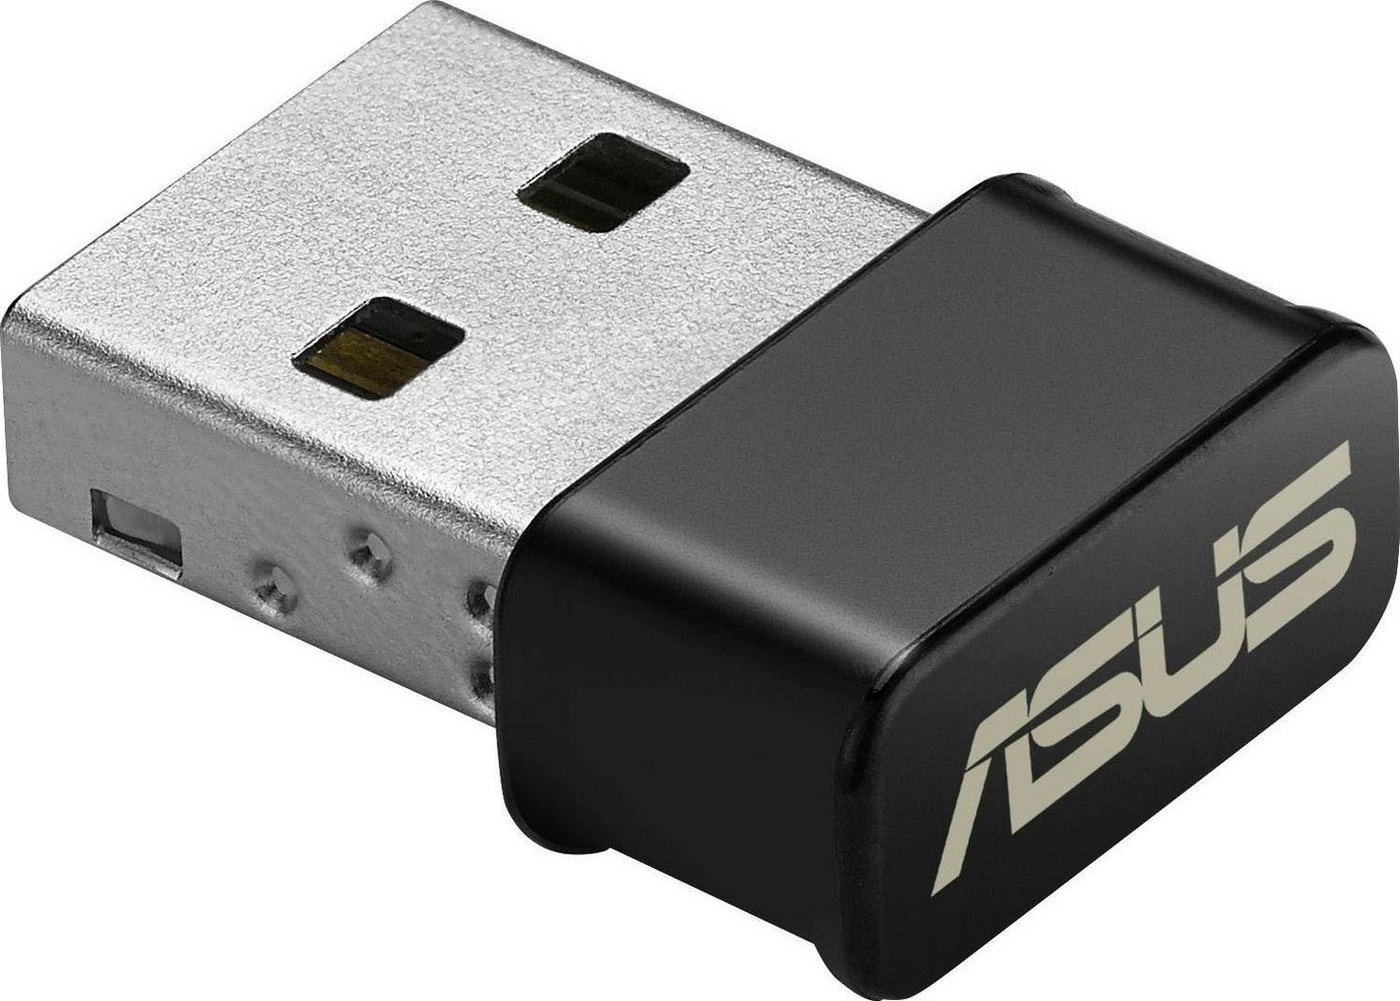 USB-AC53 AC1300, WLAN-Adapter